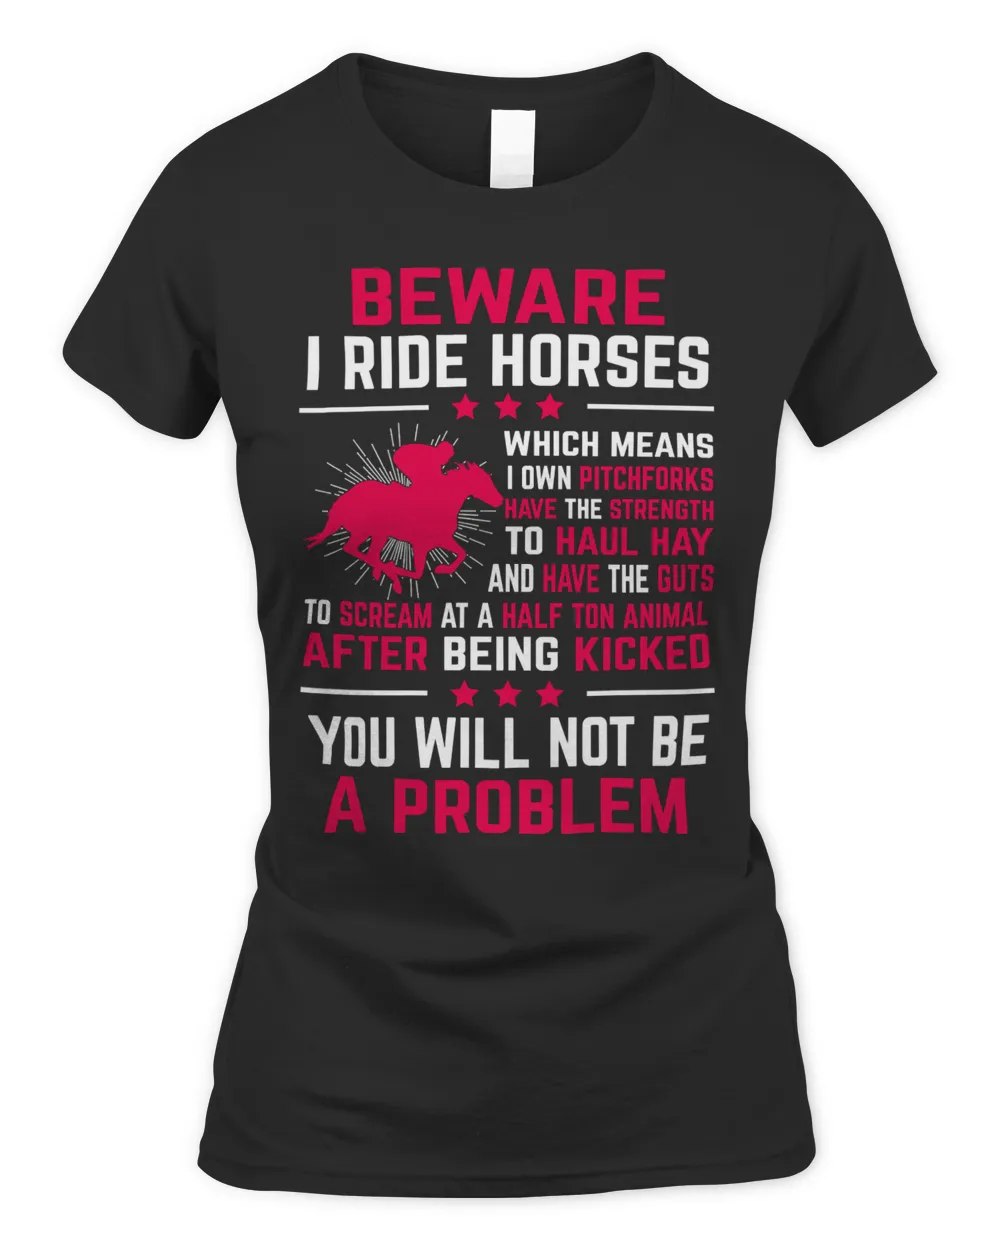 Horses Equestrian HorseI Ride Horses Horse Lovers Equestrian Essential horseman Horse Riding